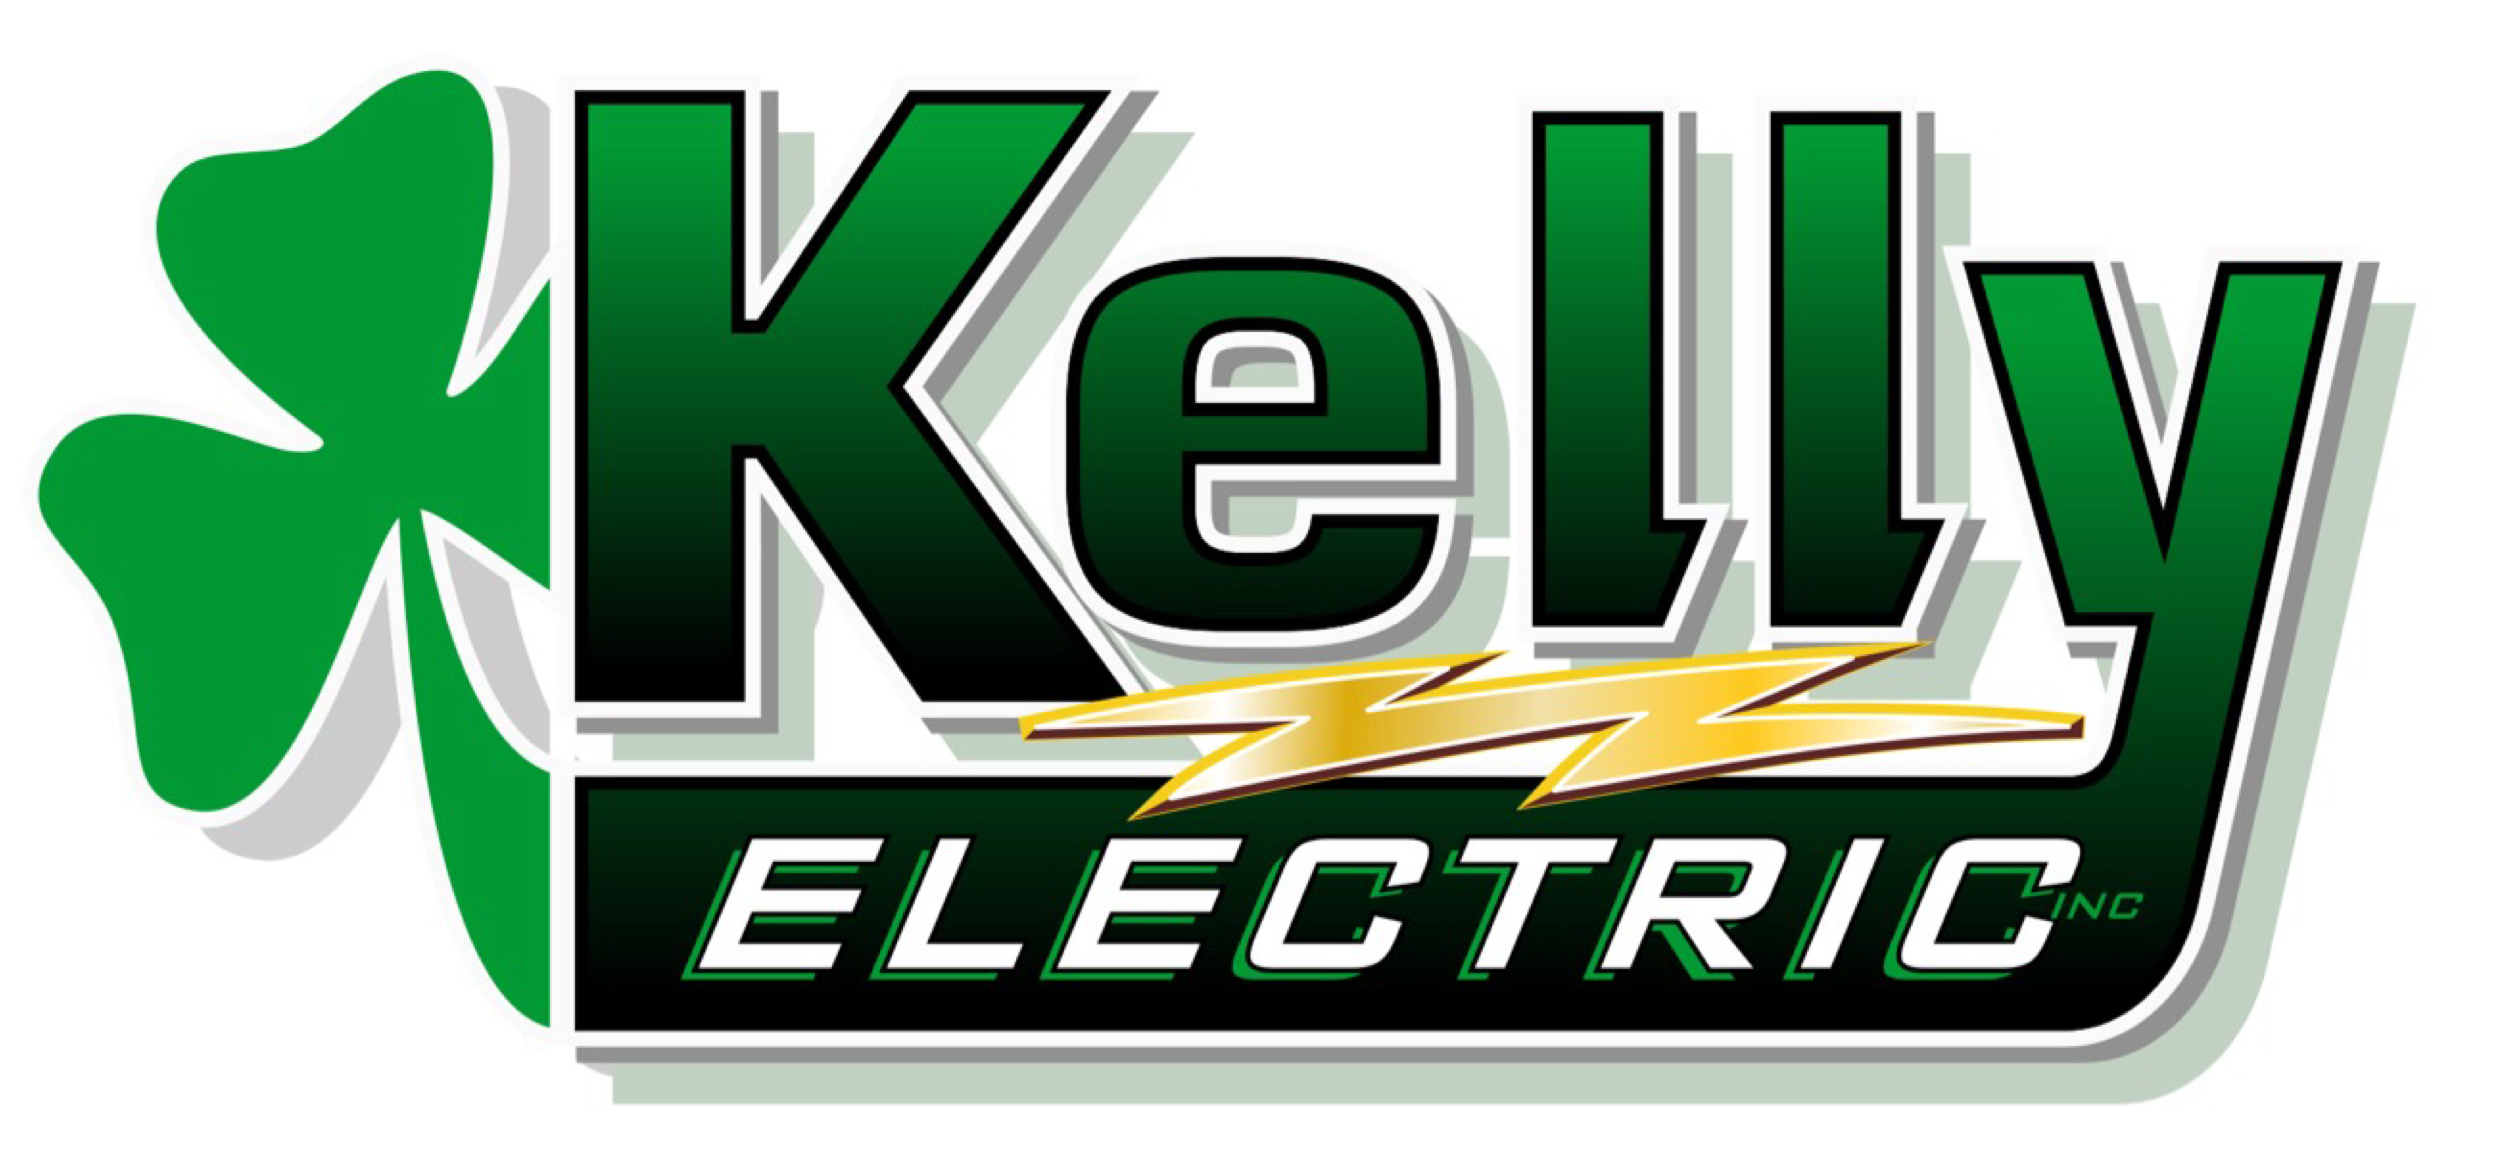 Kelly Electric Inc.